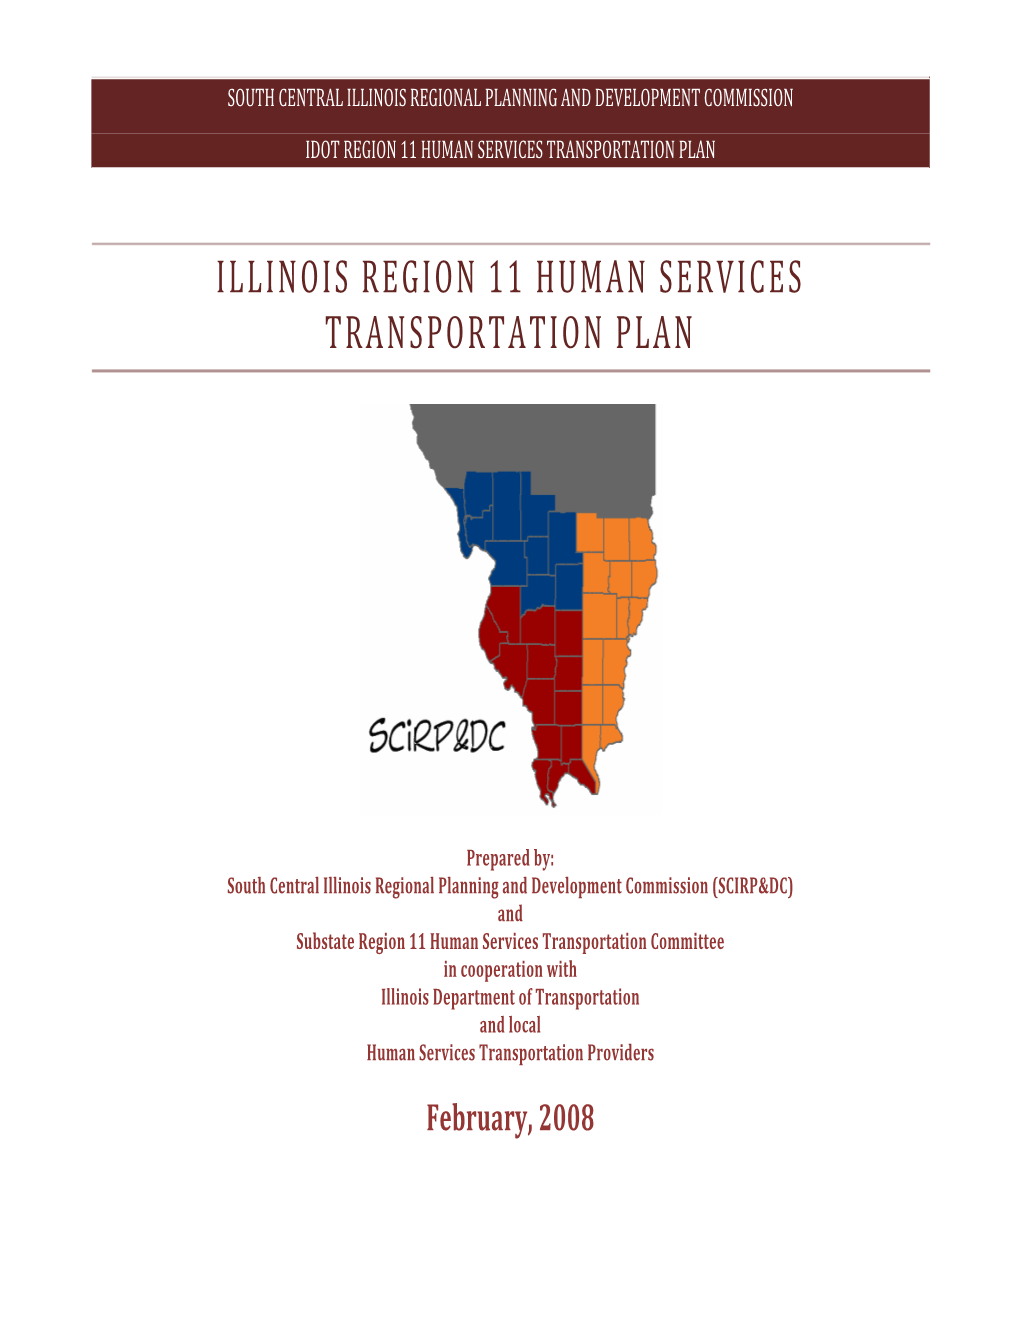 Illinois Region 11 Human Services Transportation Plan